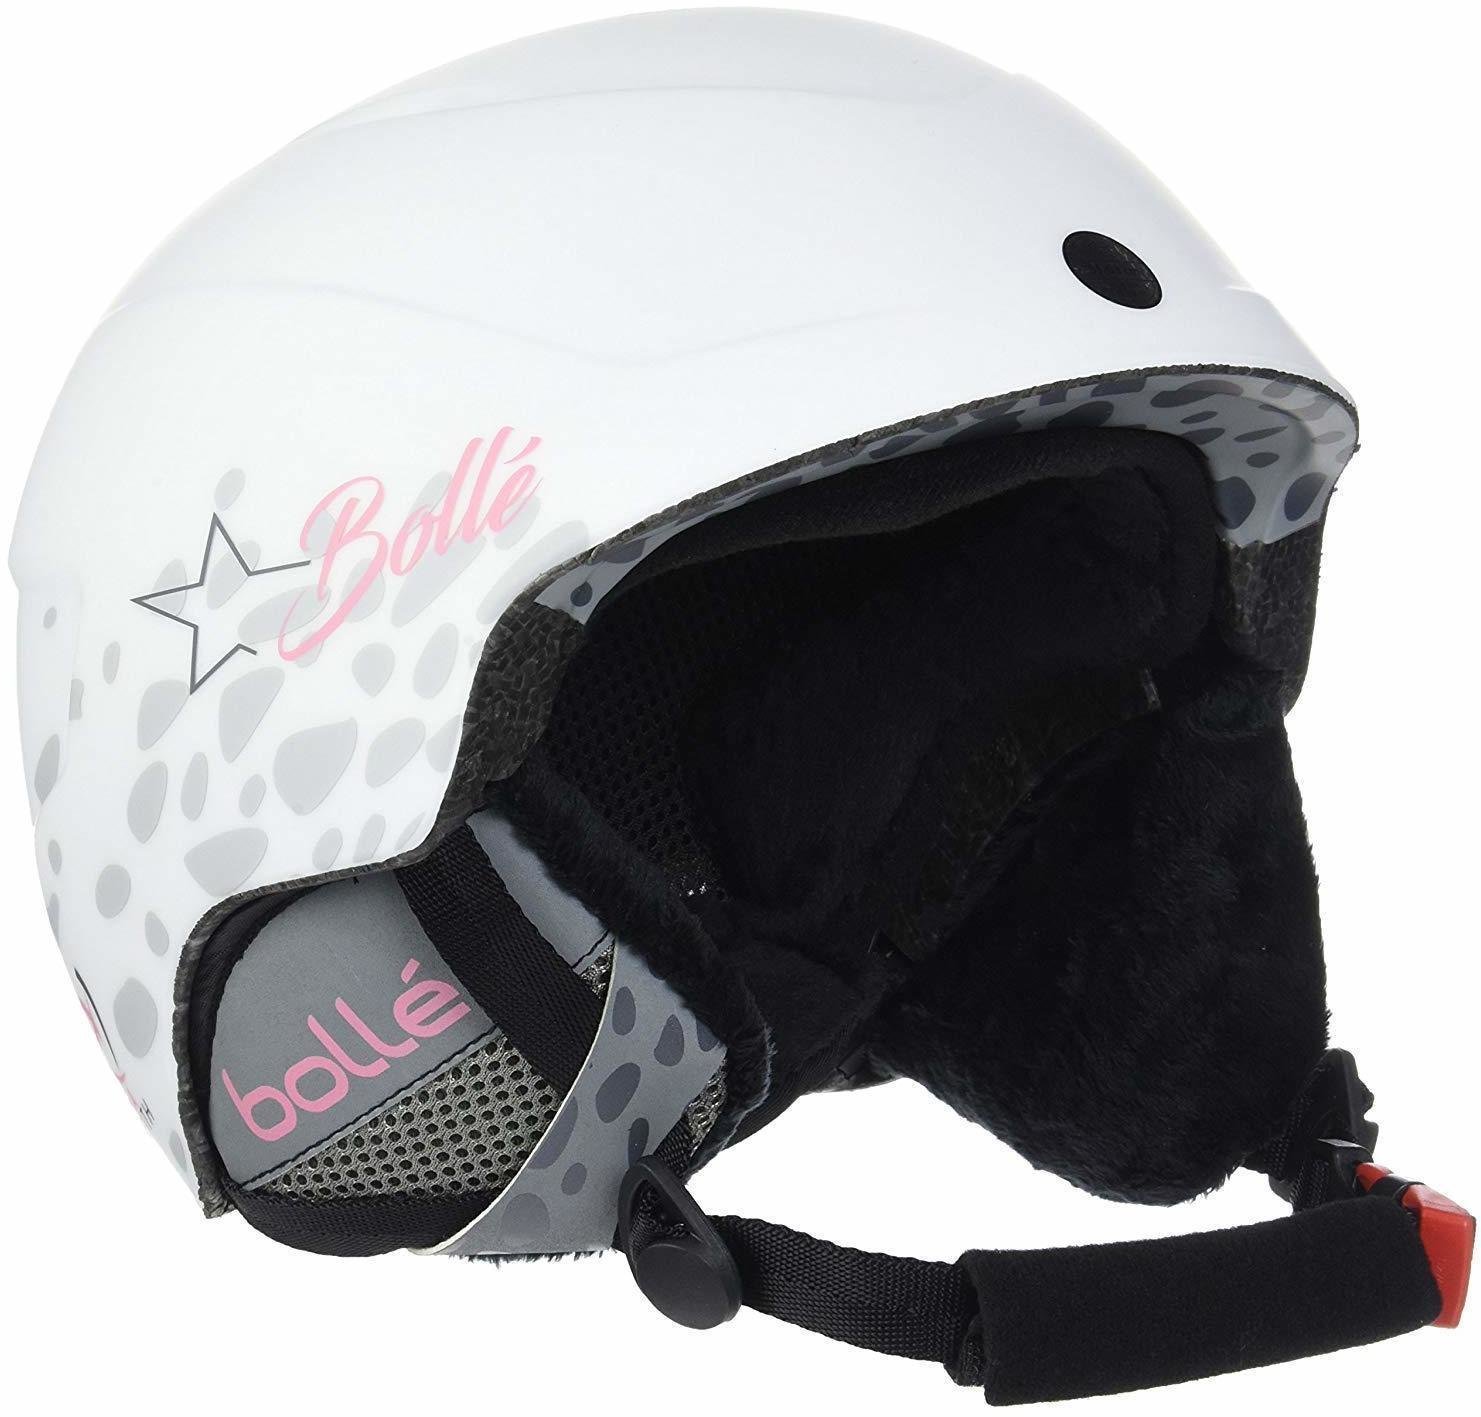 Ski Helmet Bollé B-Lieve Anna Veith Signature Series 51-53 cm 17/18 Junior